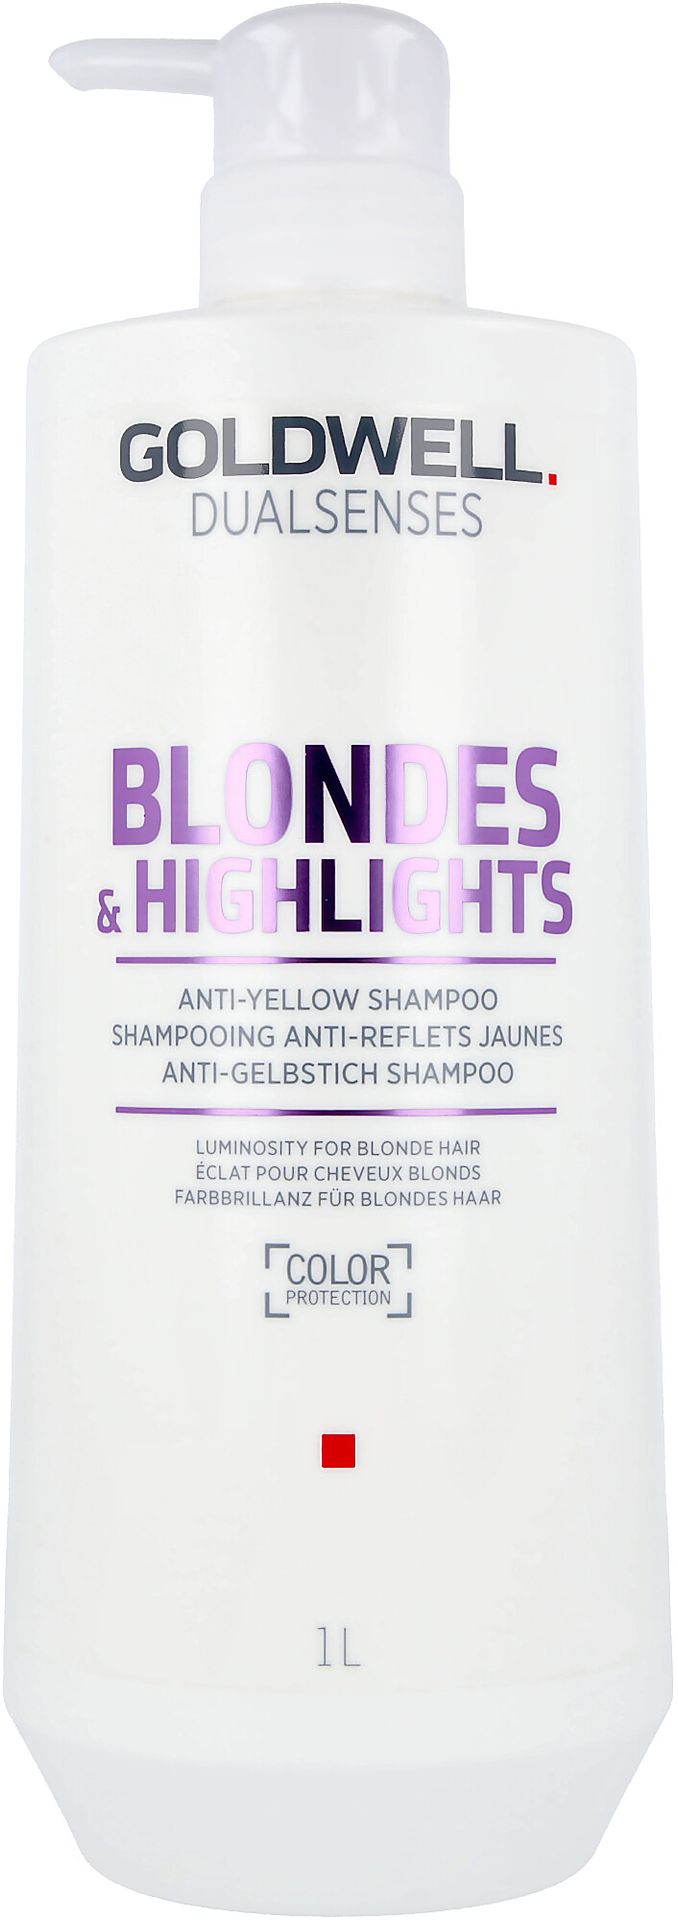 Goldwell Dualsenses Blondes & Highlights Anti-Yellow Shampoo (1000ml)